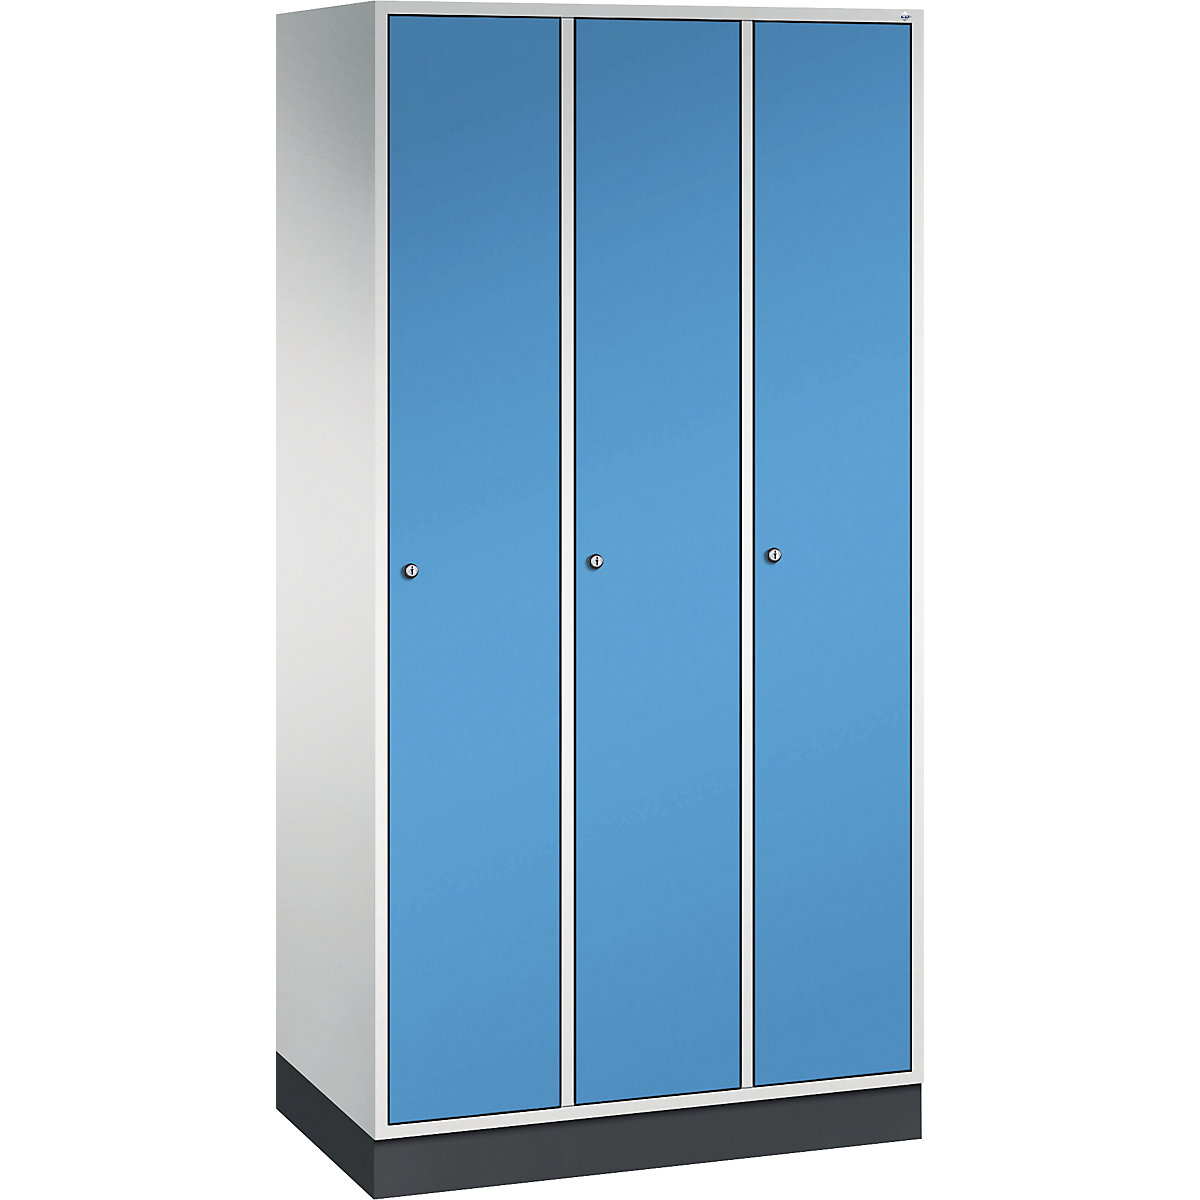 INTRO stalen garderobekast – C+P, breedte 920 mm, 3 afdelingen, kastframe lichtgrijs, deuren lichtblauw-9